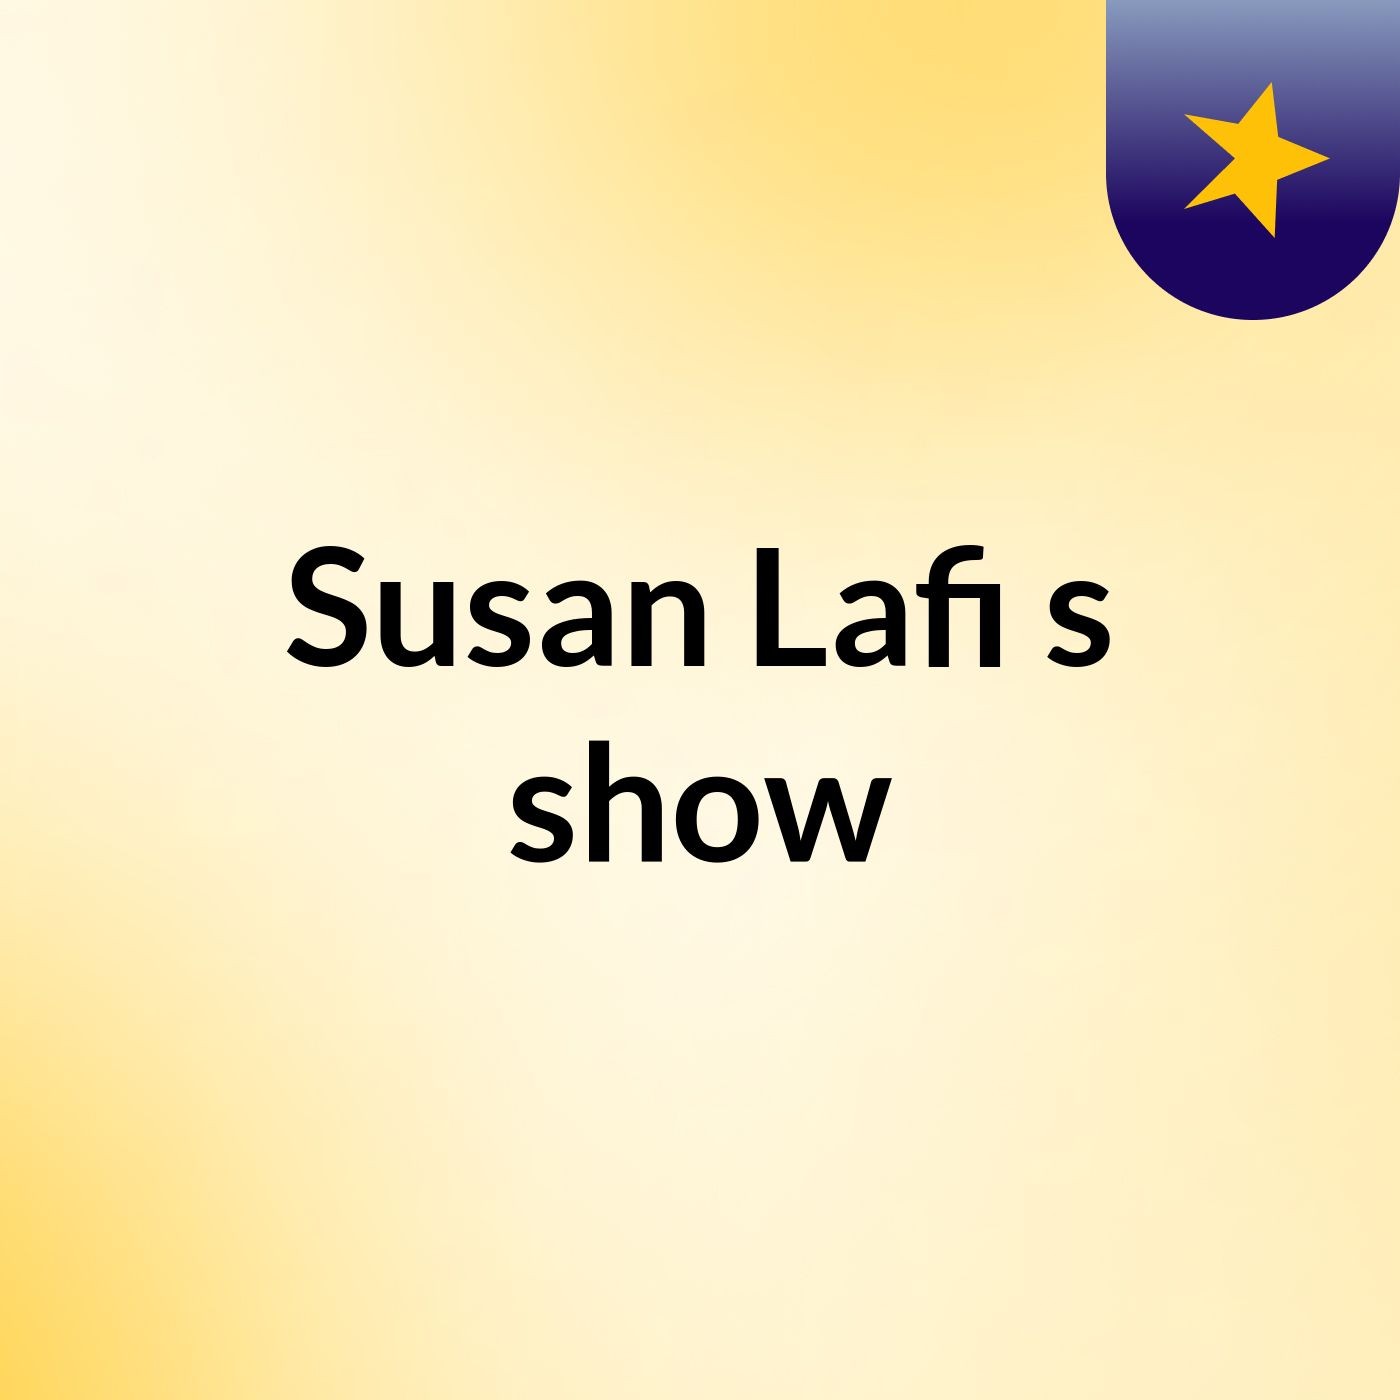 Susan Lafi's show